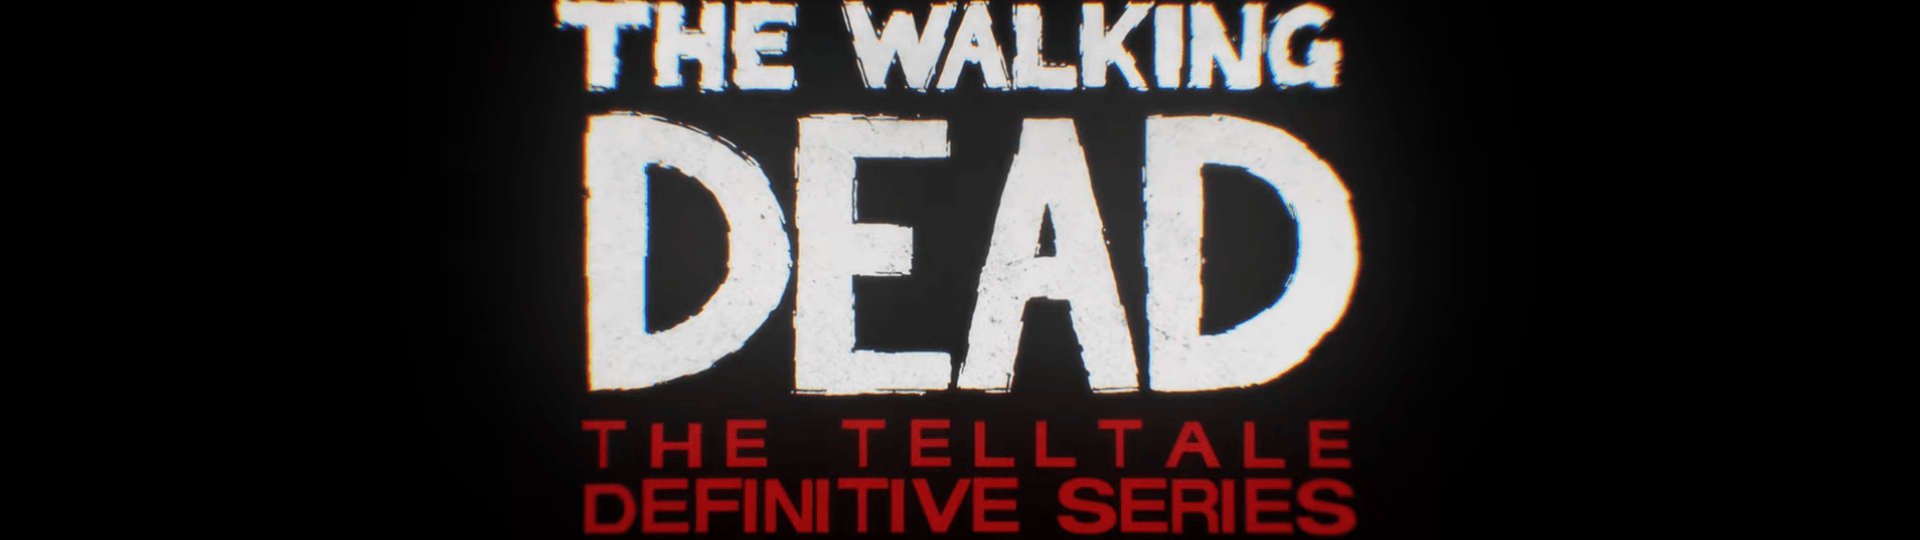 The.Walking.Dead .The .Telltale.Definitive.Series.Banner0 1